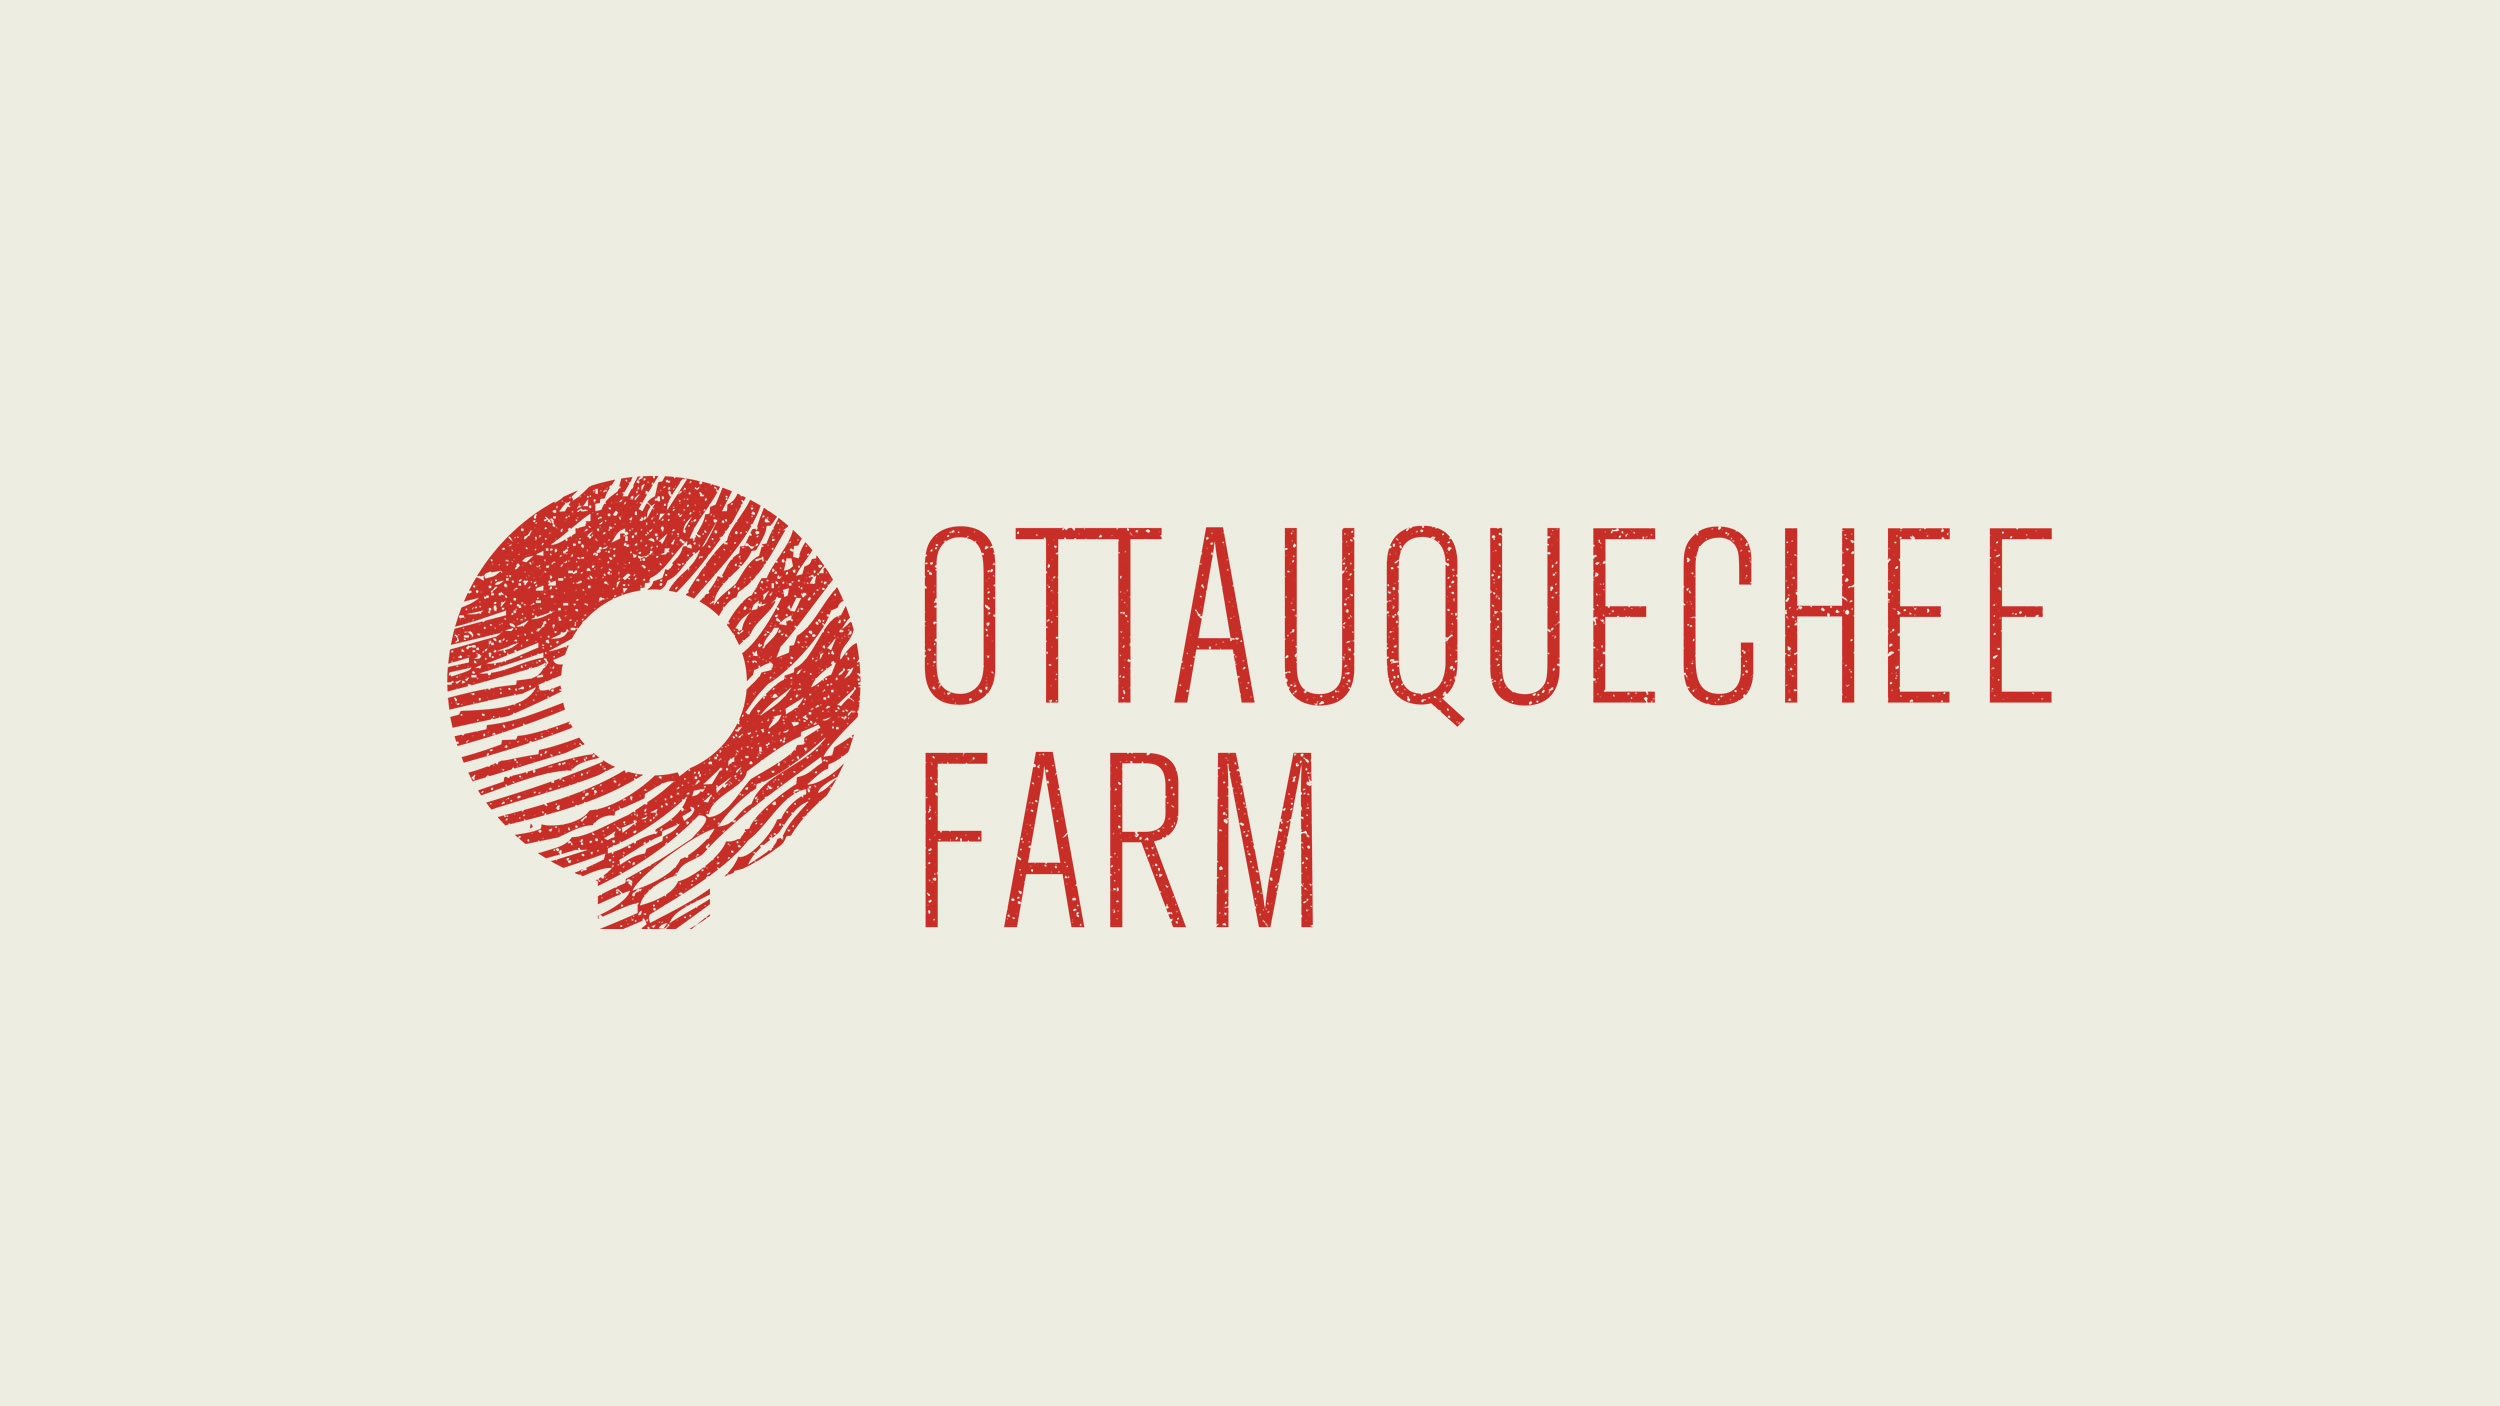 Branding and logo for Ottauquechee Farm